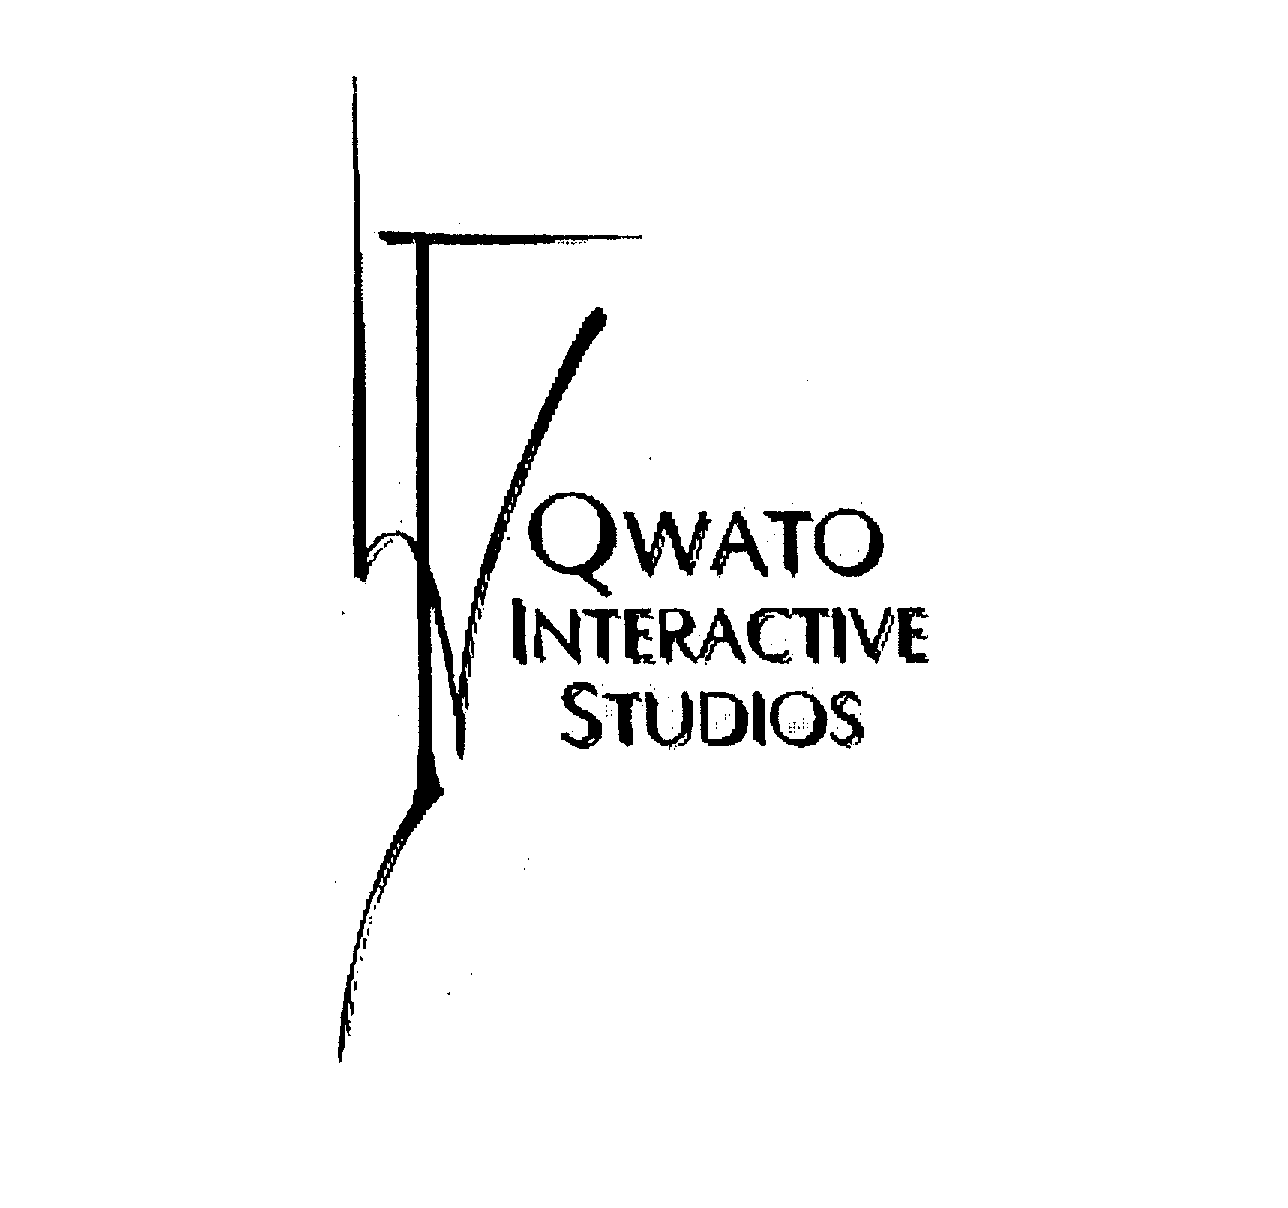  QWATO INTERACTIVE STUDIOS